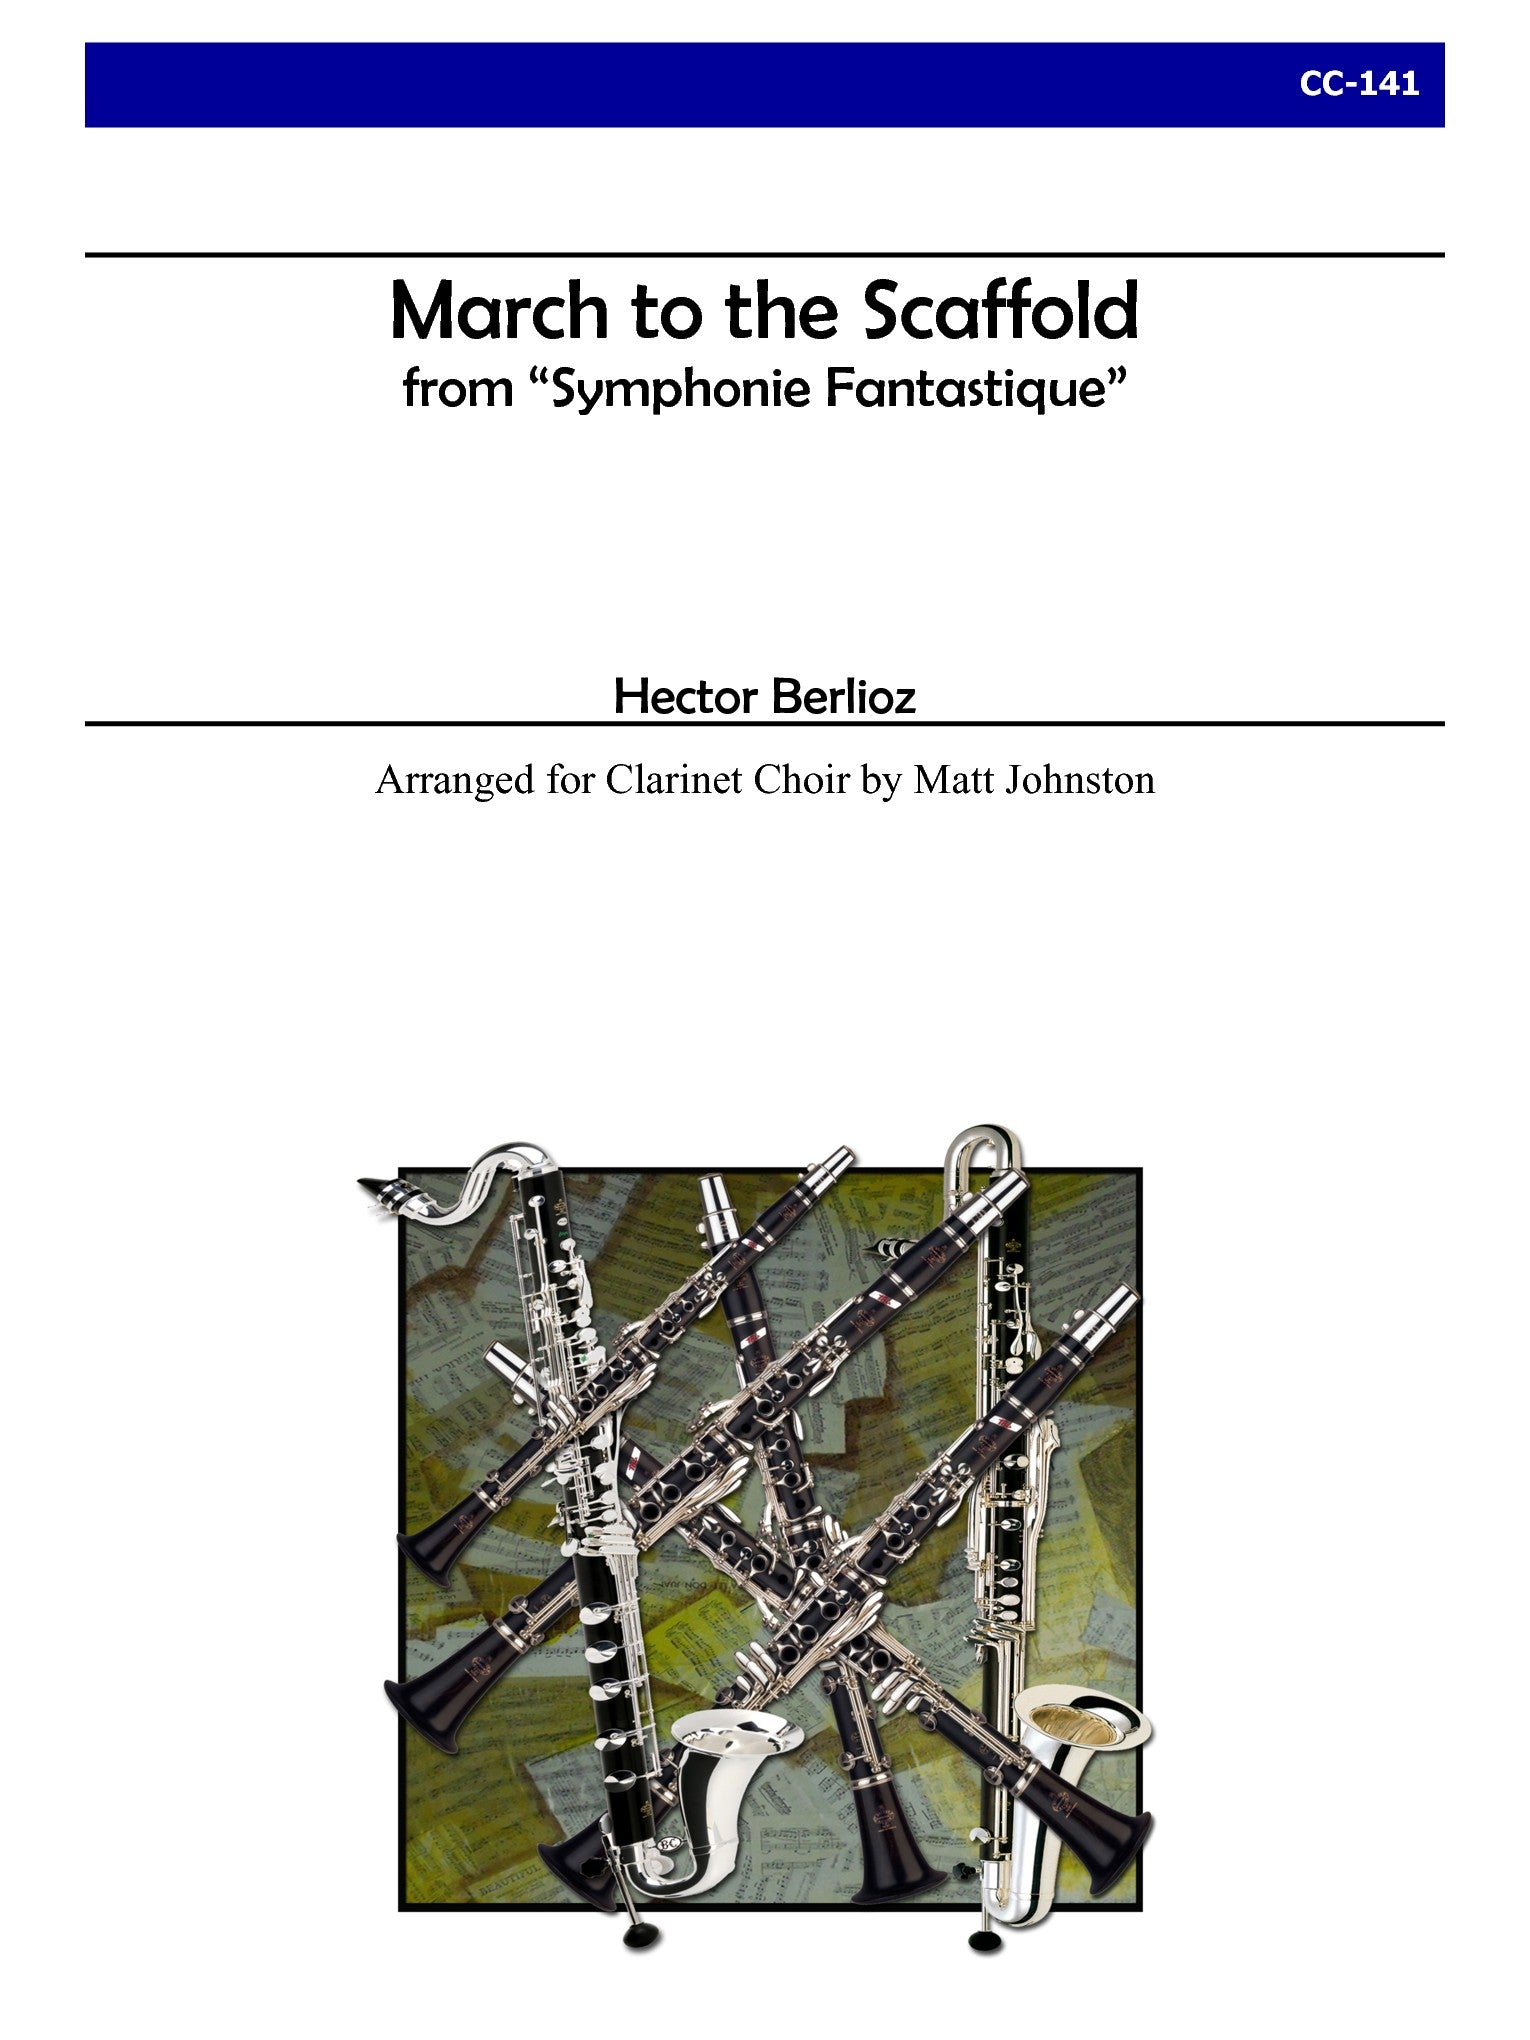 Berlioz (arr. Matt Johnson) - March to the Scaffold from "Symphonie Fantastique" for Clarinet Choir